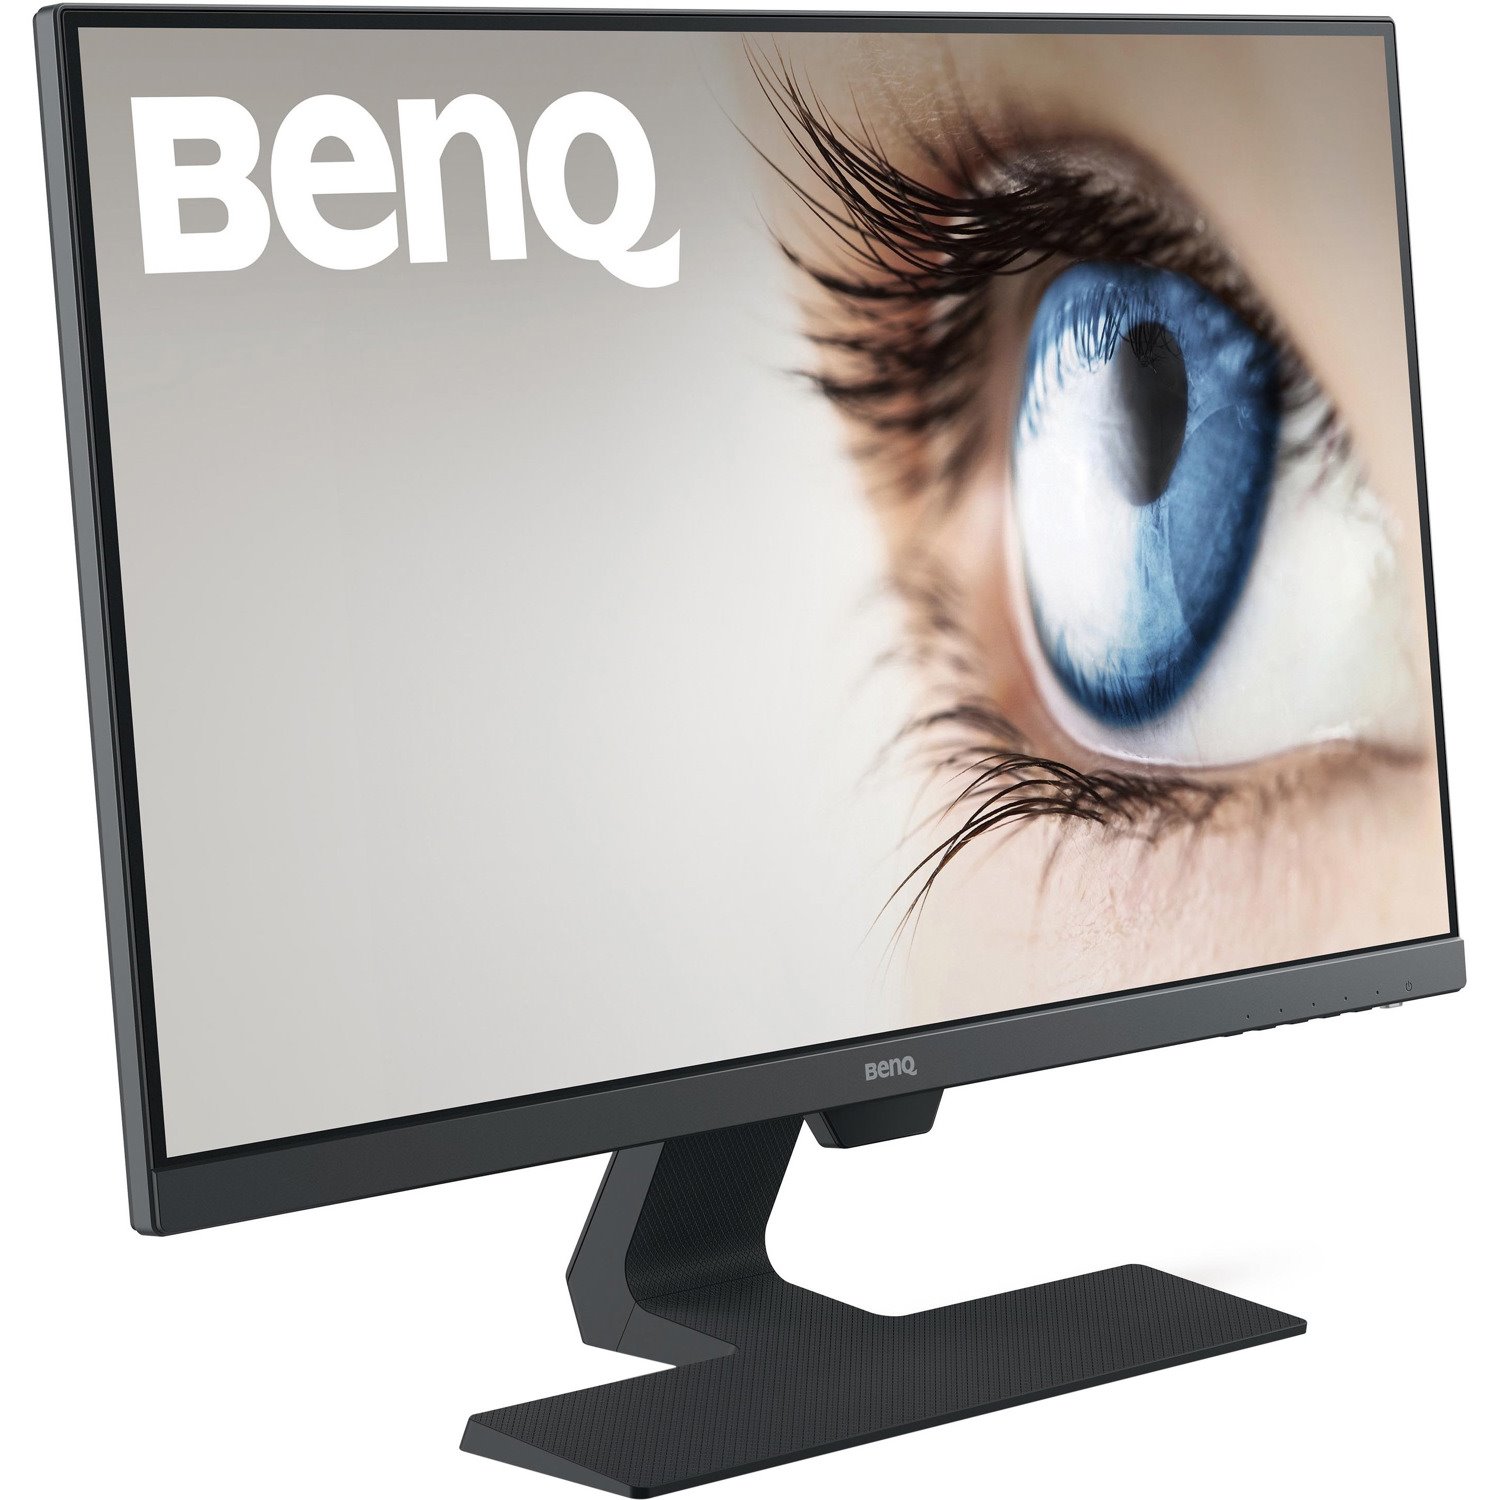 BenQ GW2780 27" Class Full HD LCD Monitor - 16:9 - Black